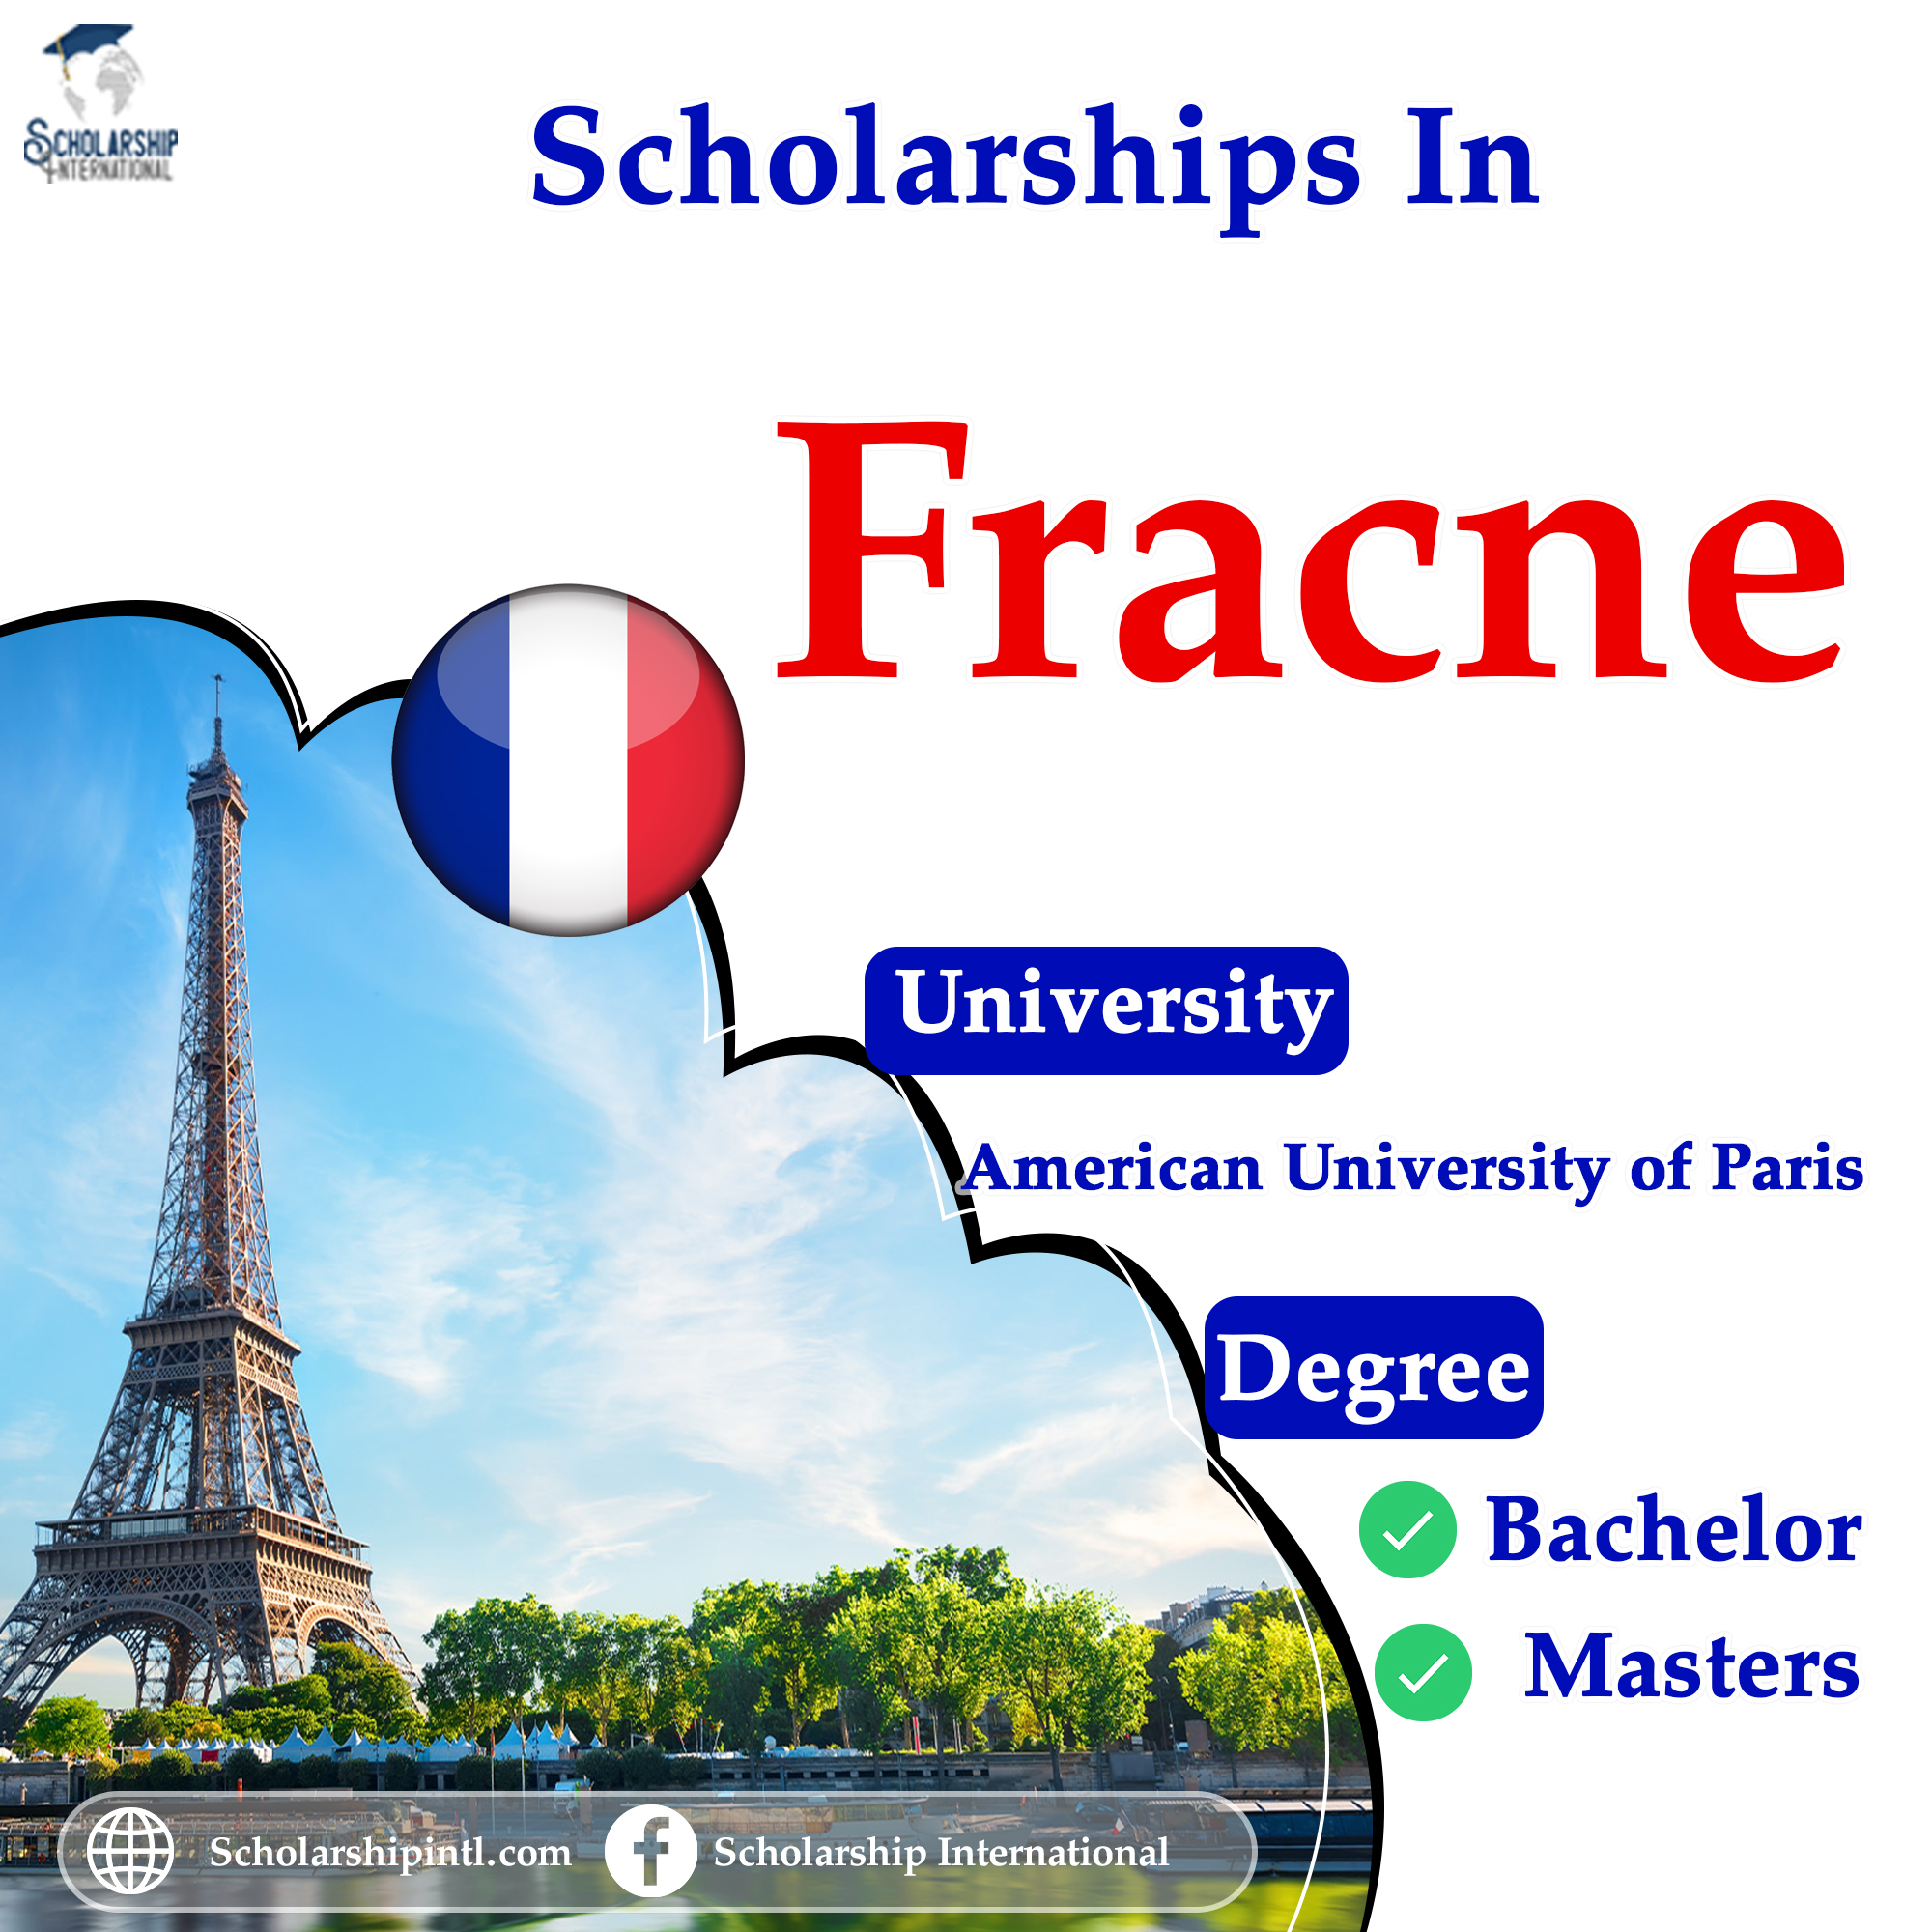 American University of Paris Scholarship International